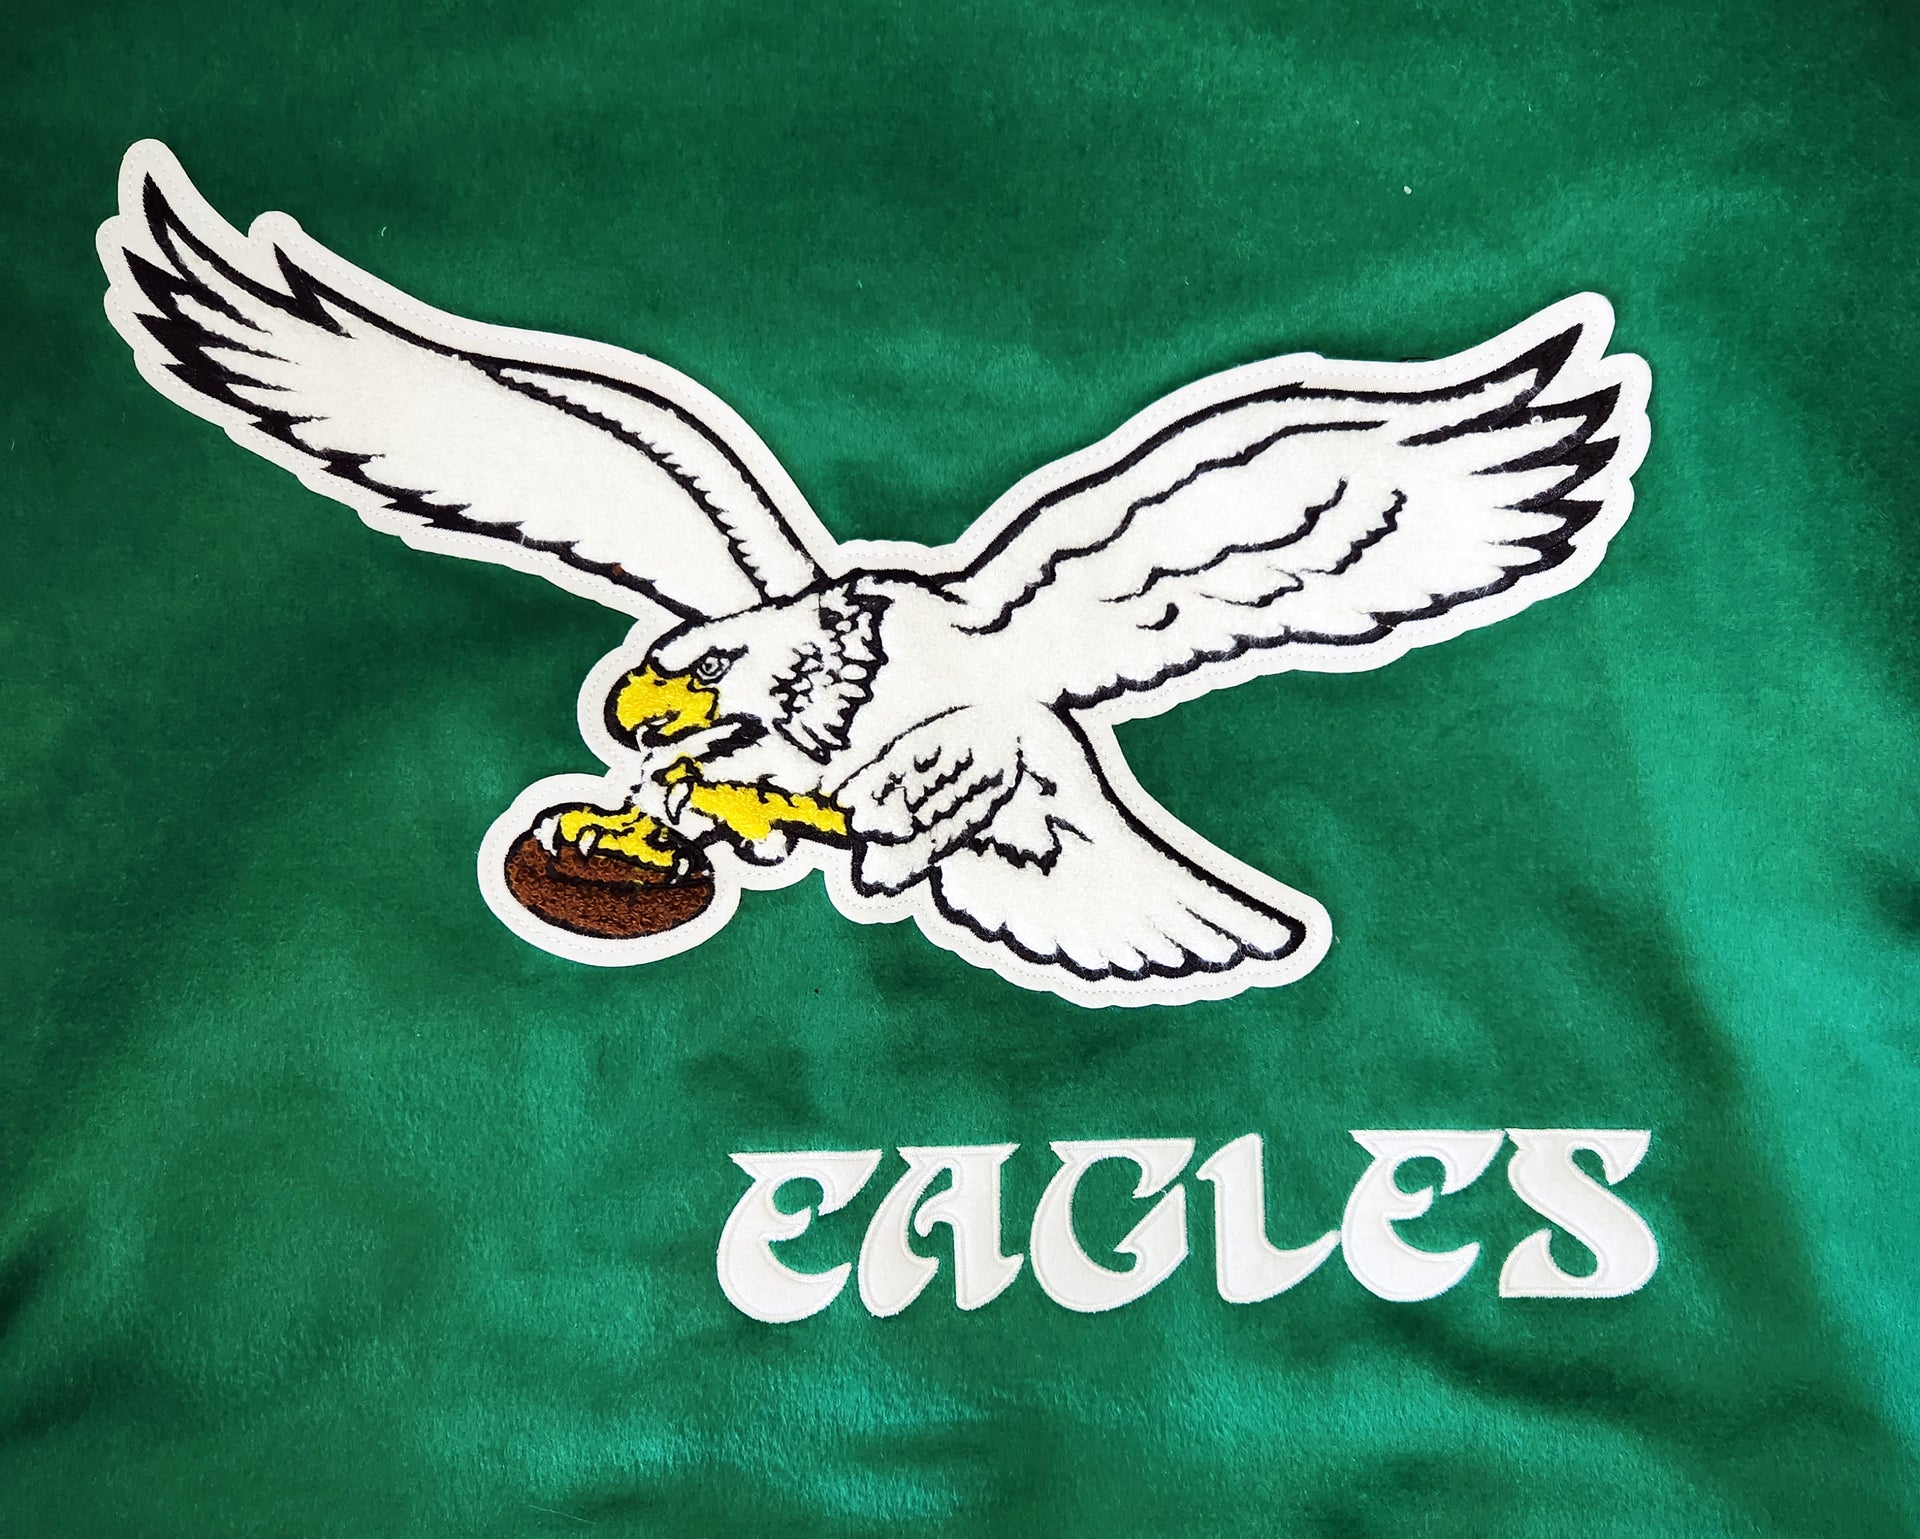 Eagles Replica Team Varsity Jacket (Diana)